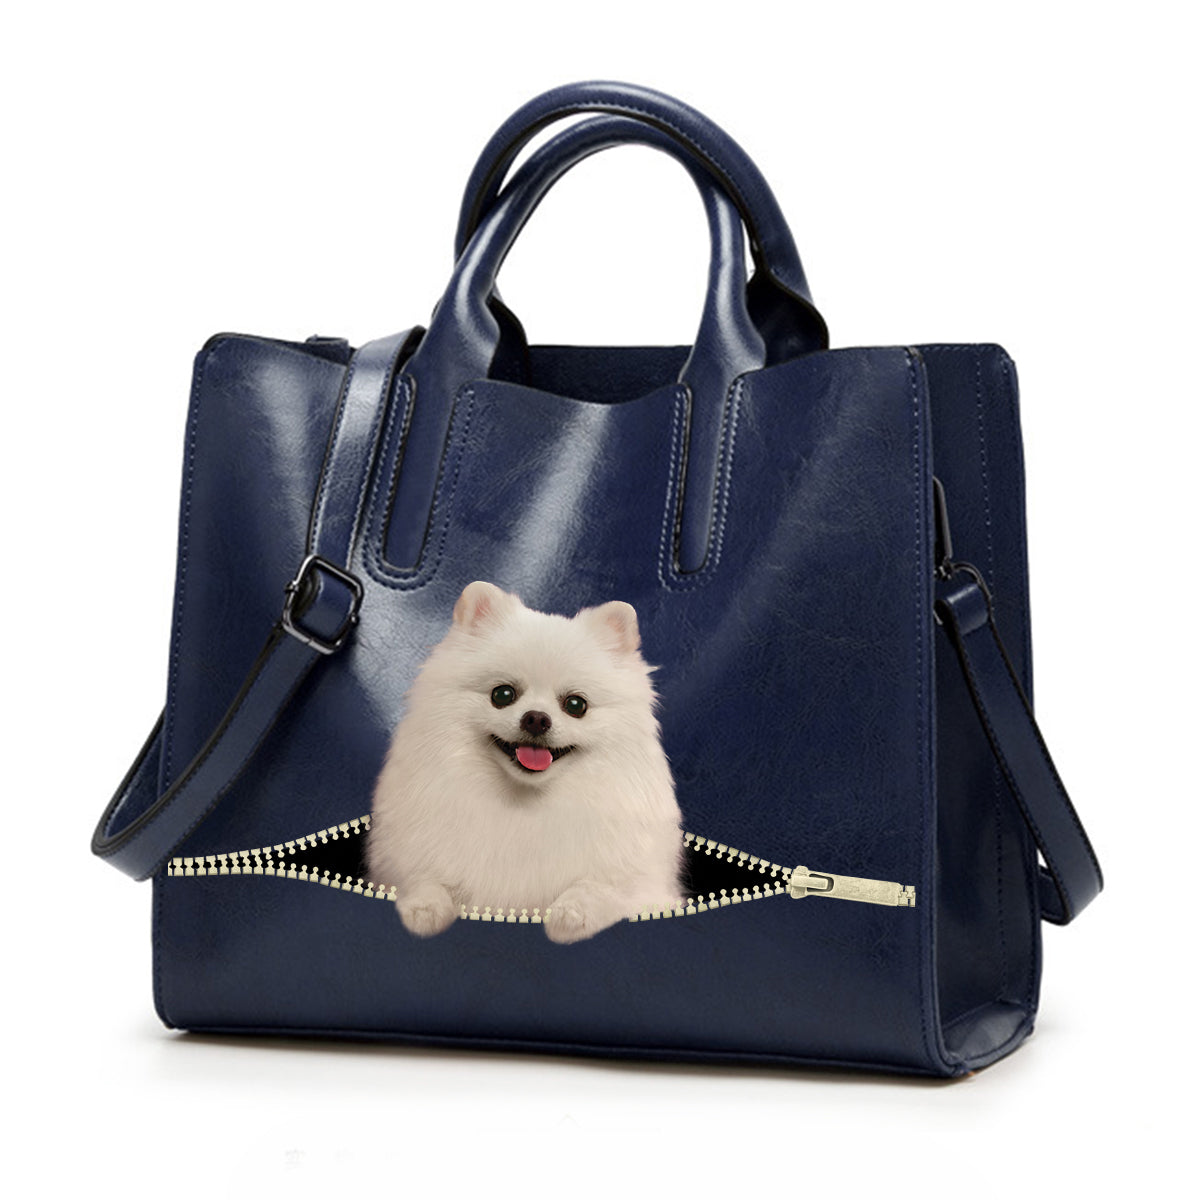 Reduce Stress At Work With Pomeranian - Luxury Handbag V2